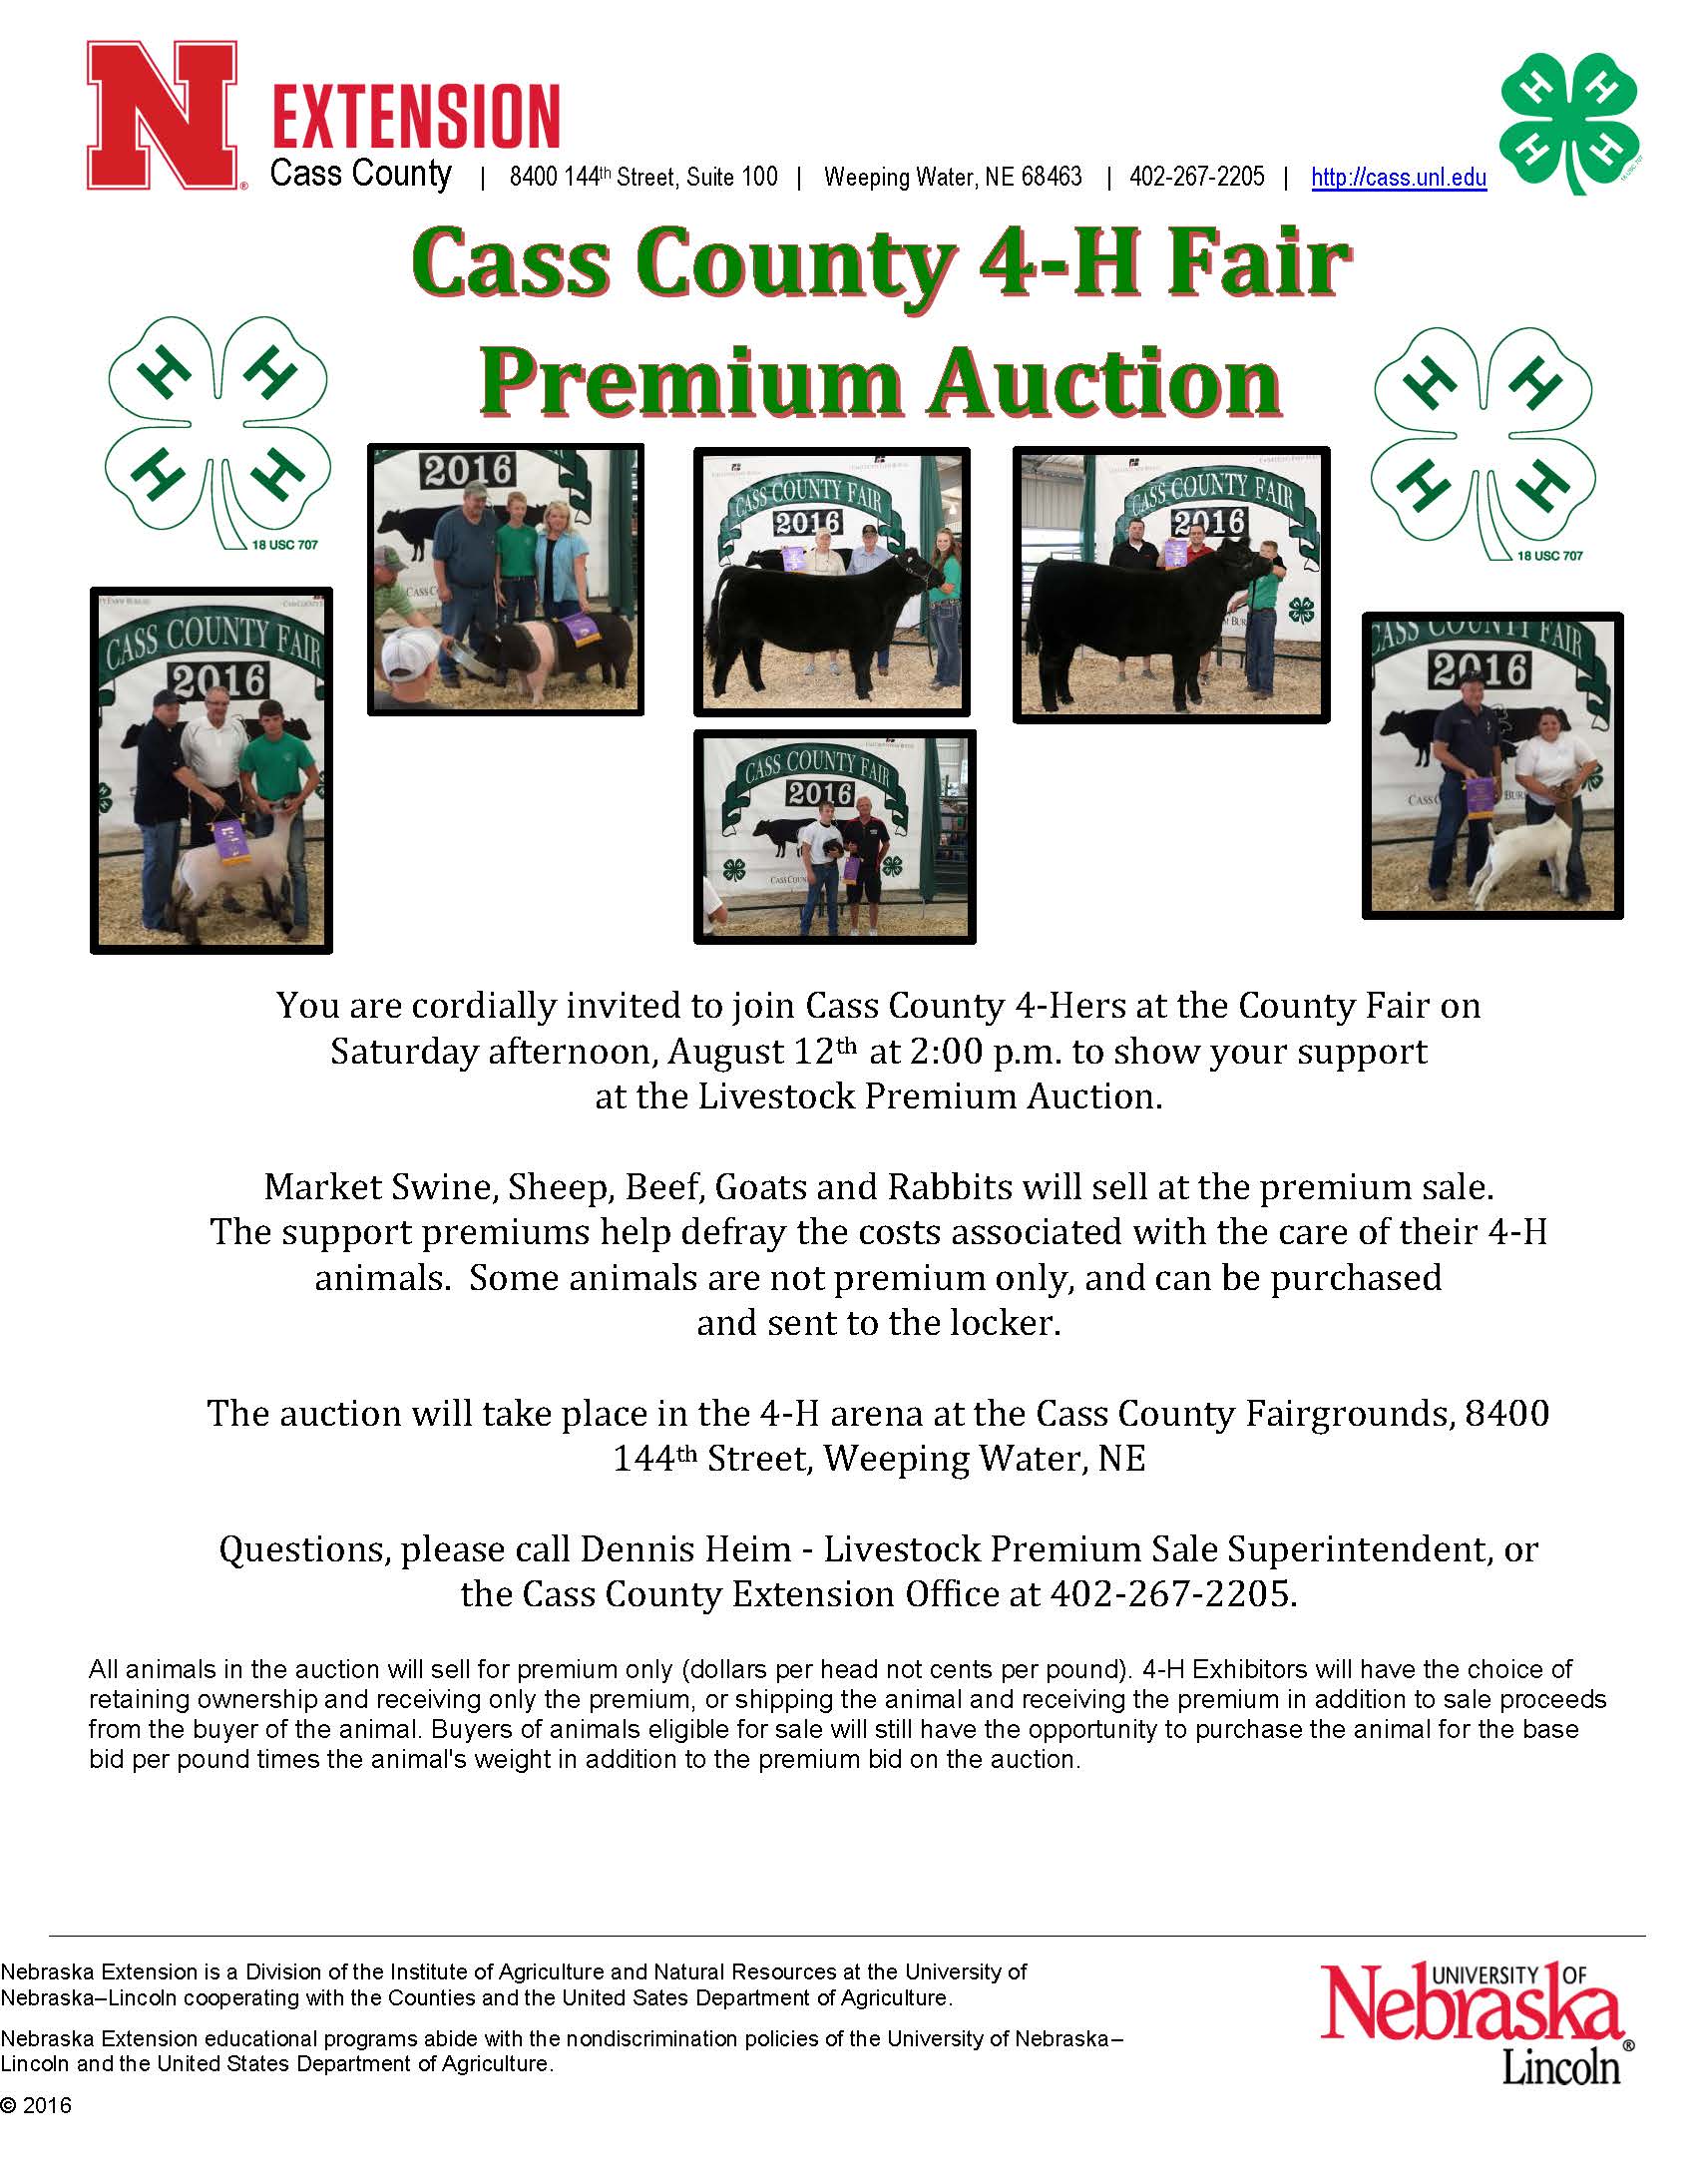 Livestock Auction flyer for 20171470